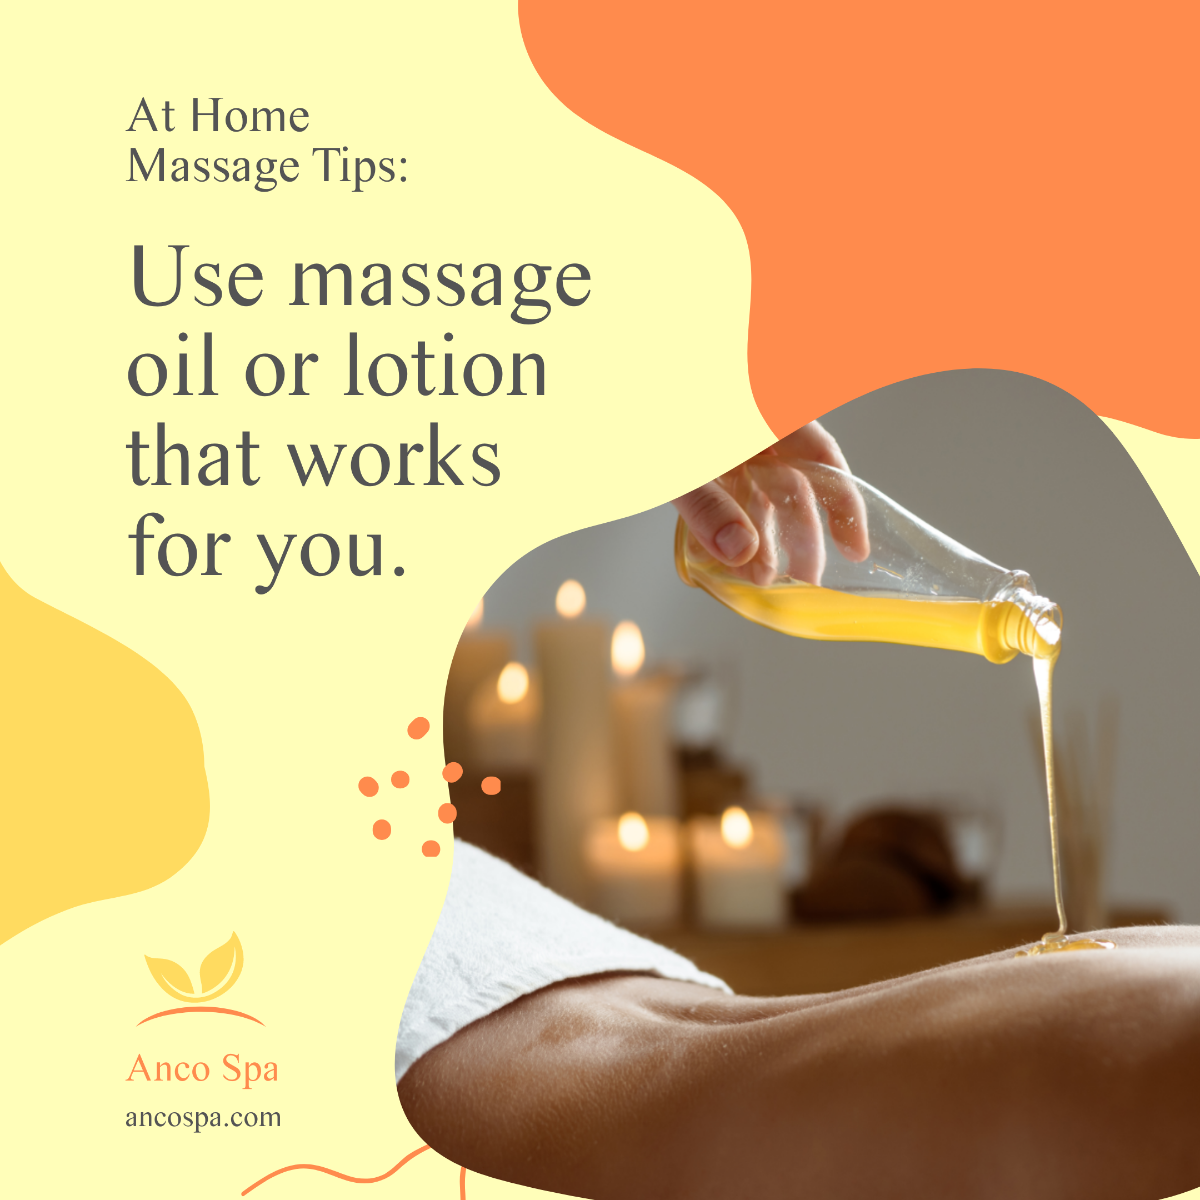 At Home Massage Tips & Tricks Post, Instagram, Facebook Template